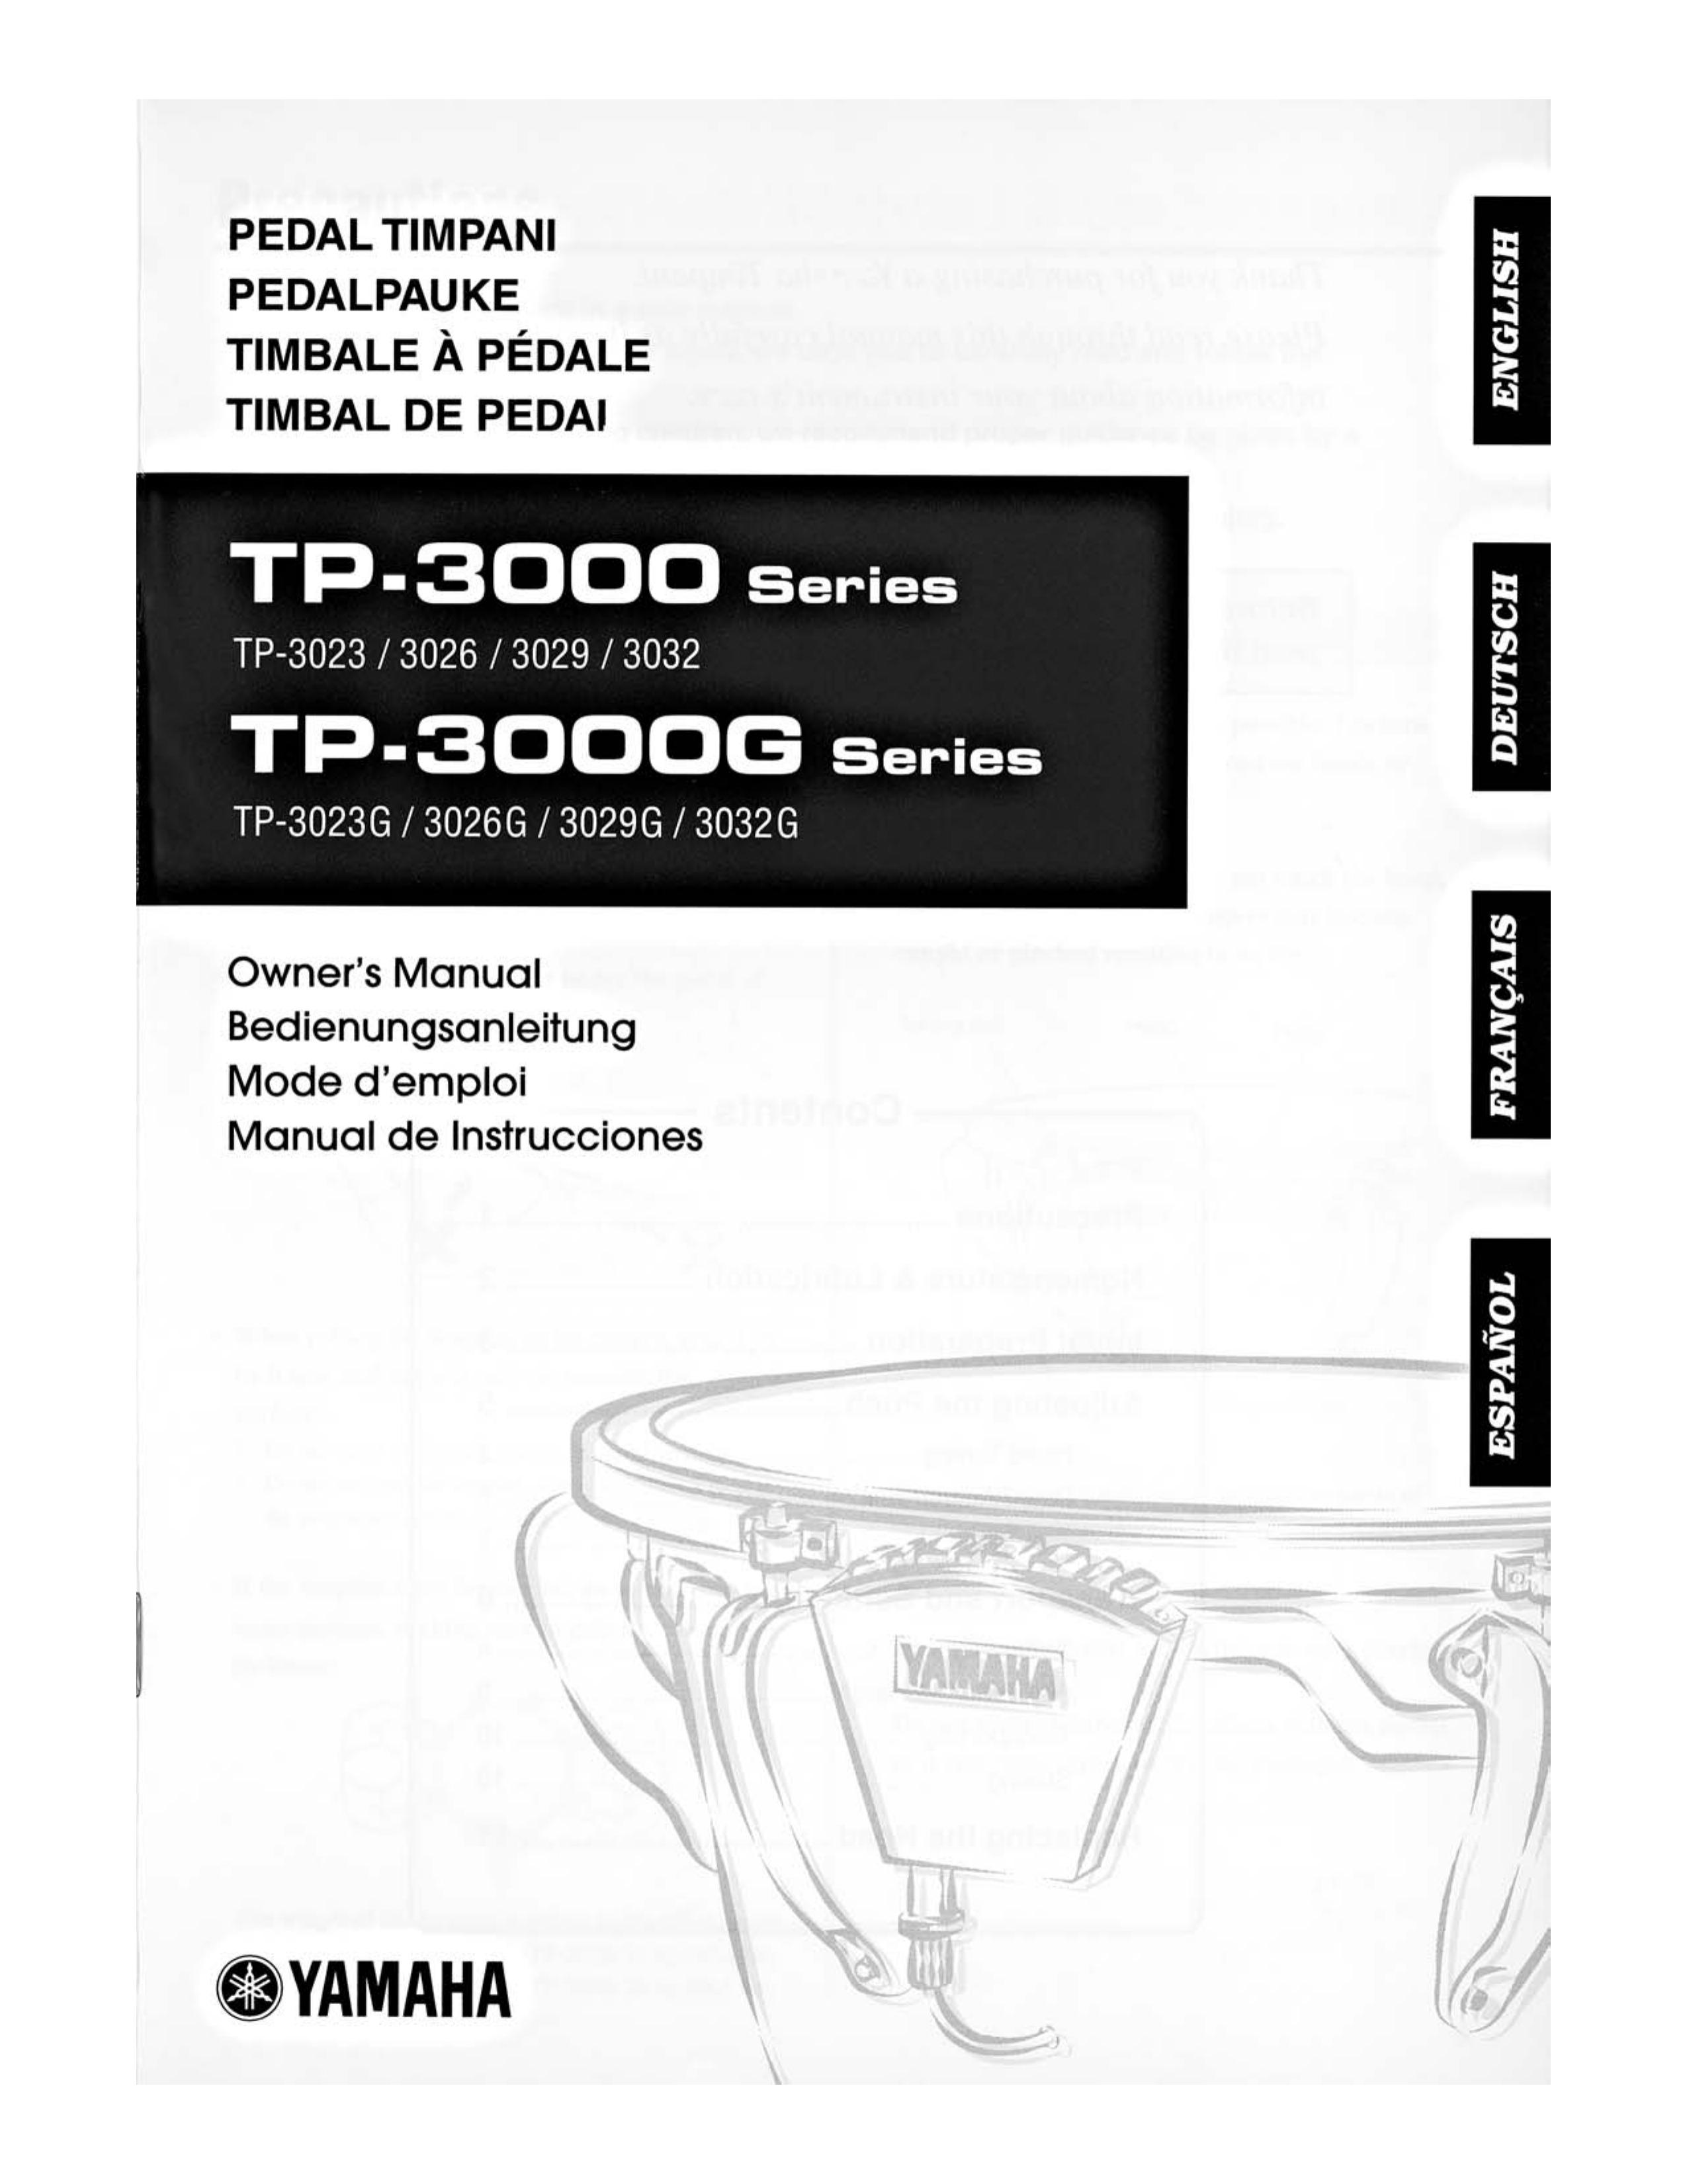 Yamaha TP-3032G Music Pedal User Manual